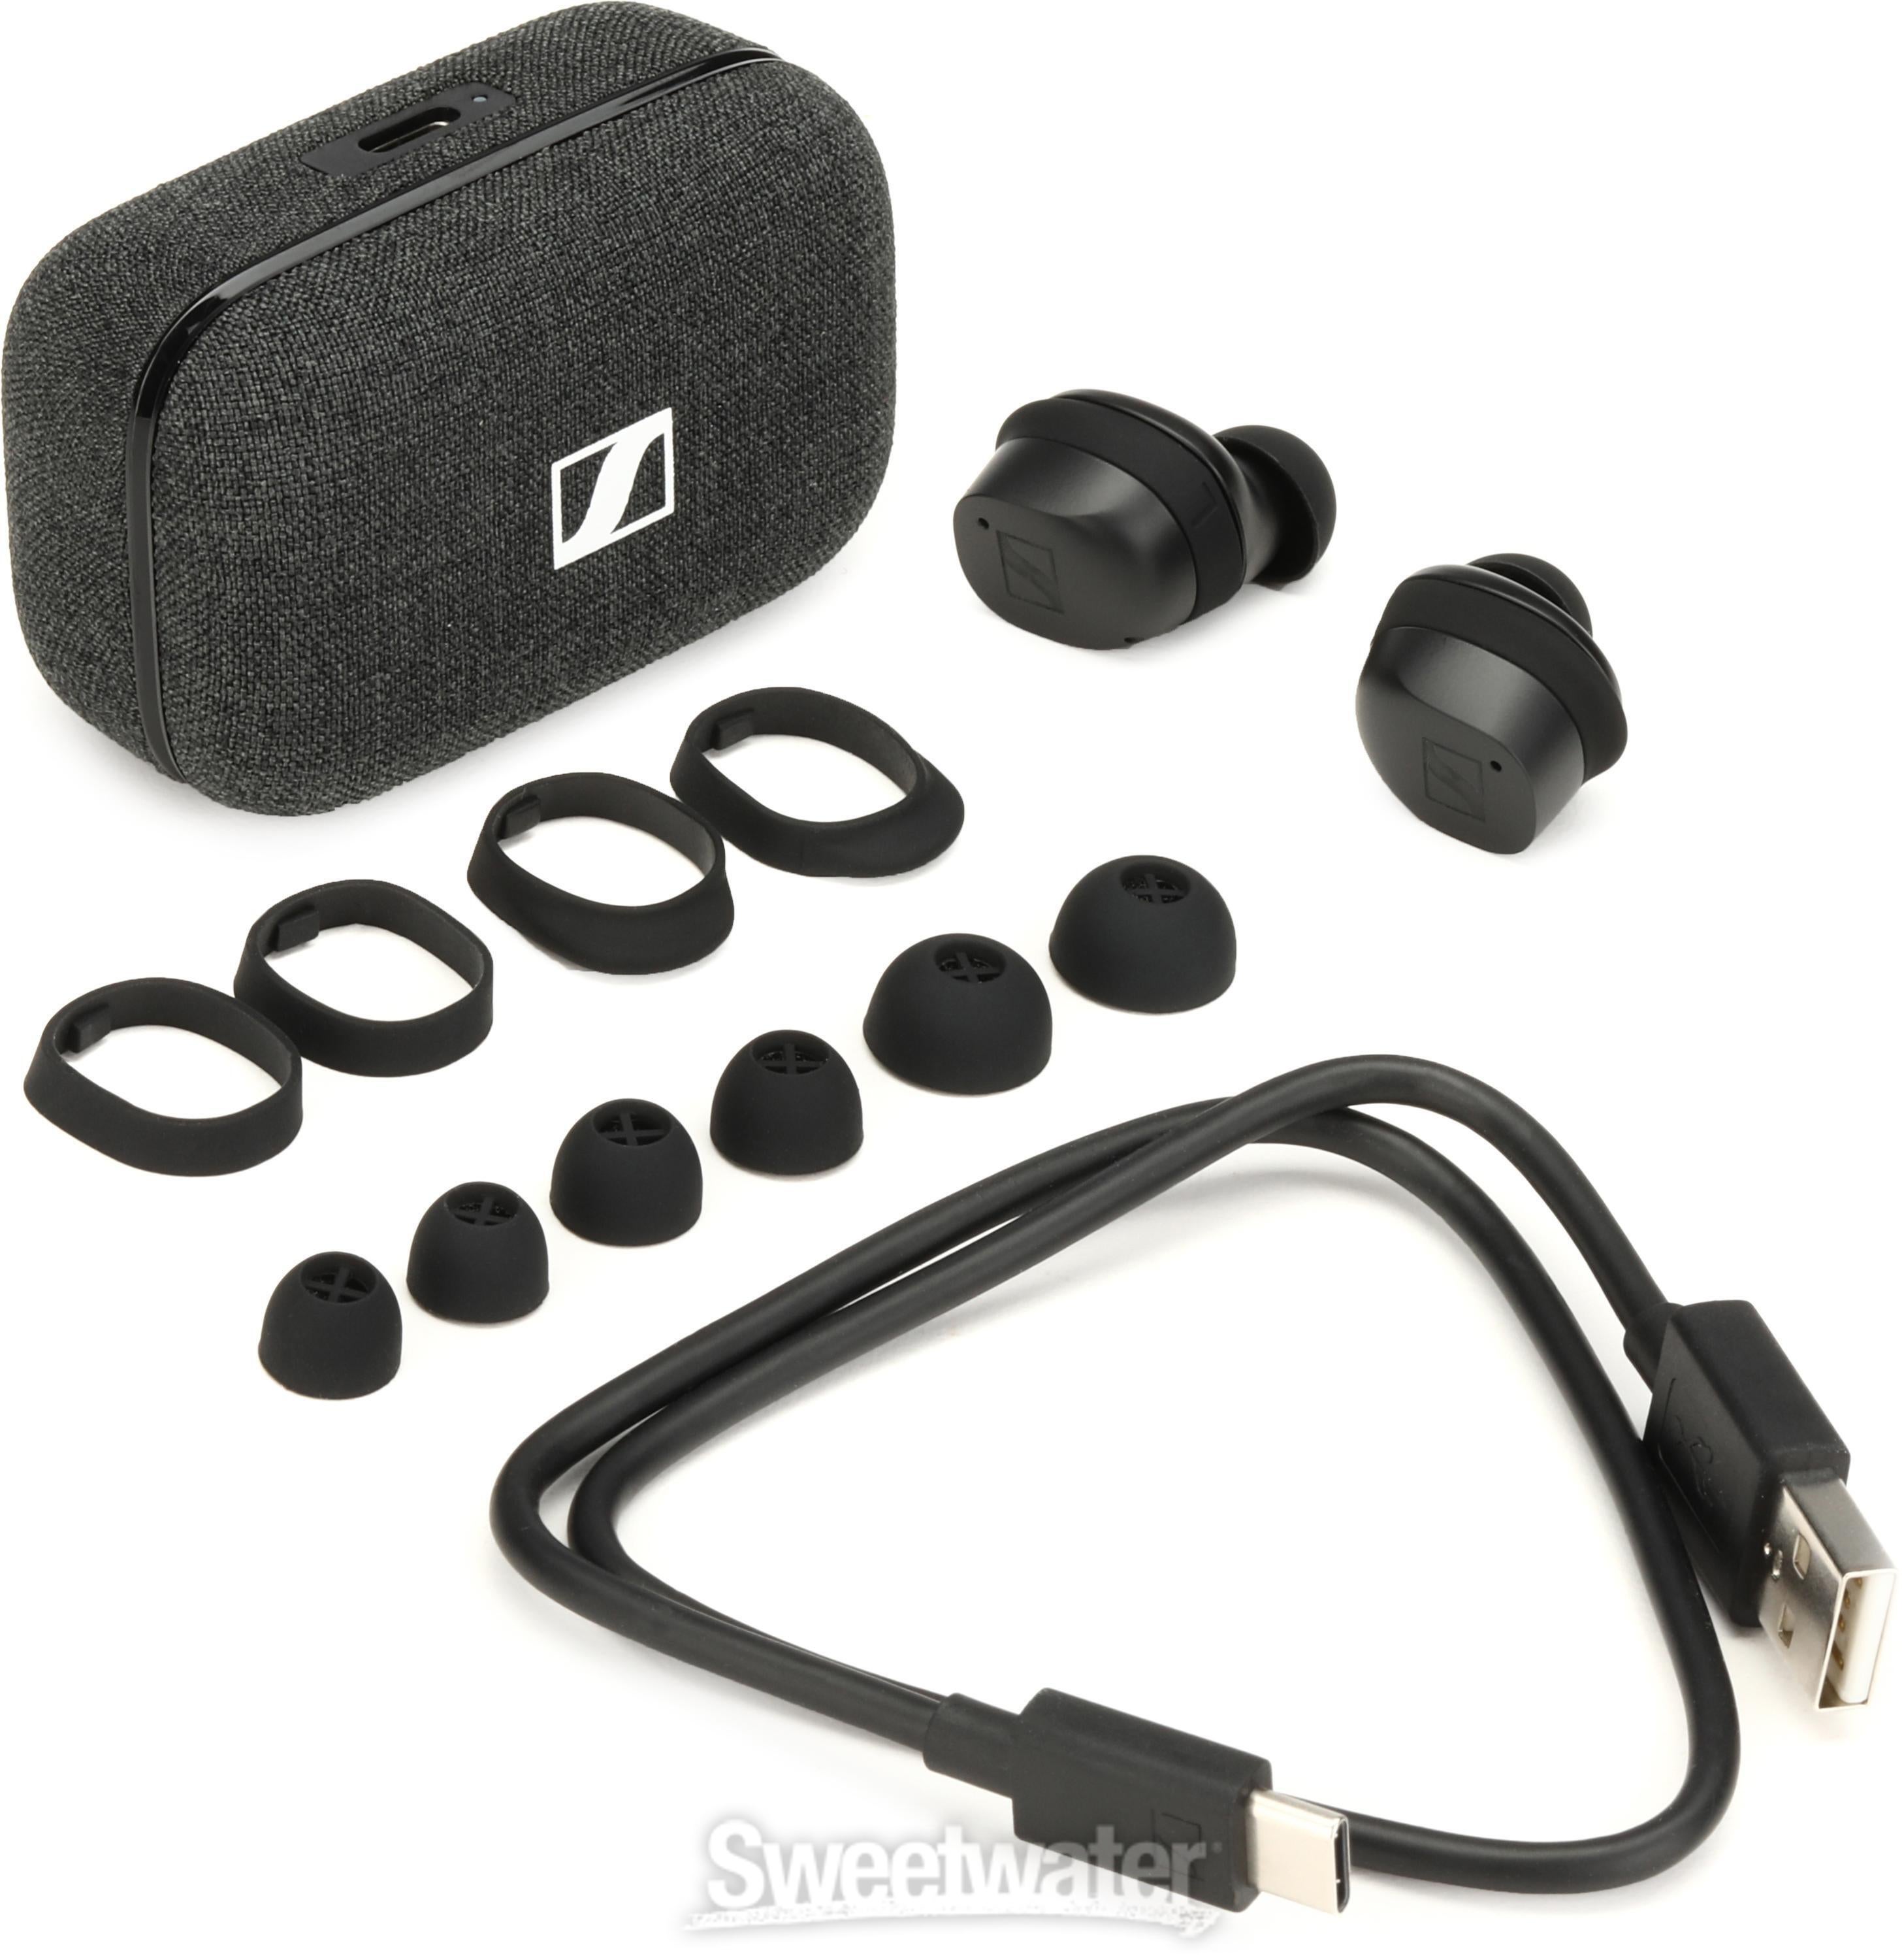 Sennheiser Momentum True Wireless 3 Earbuds - Black | Sweetwater